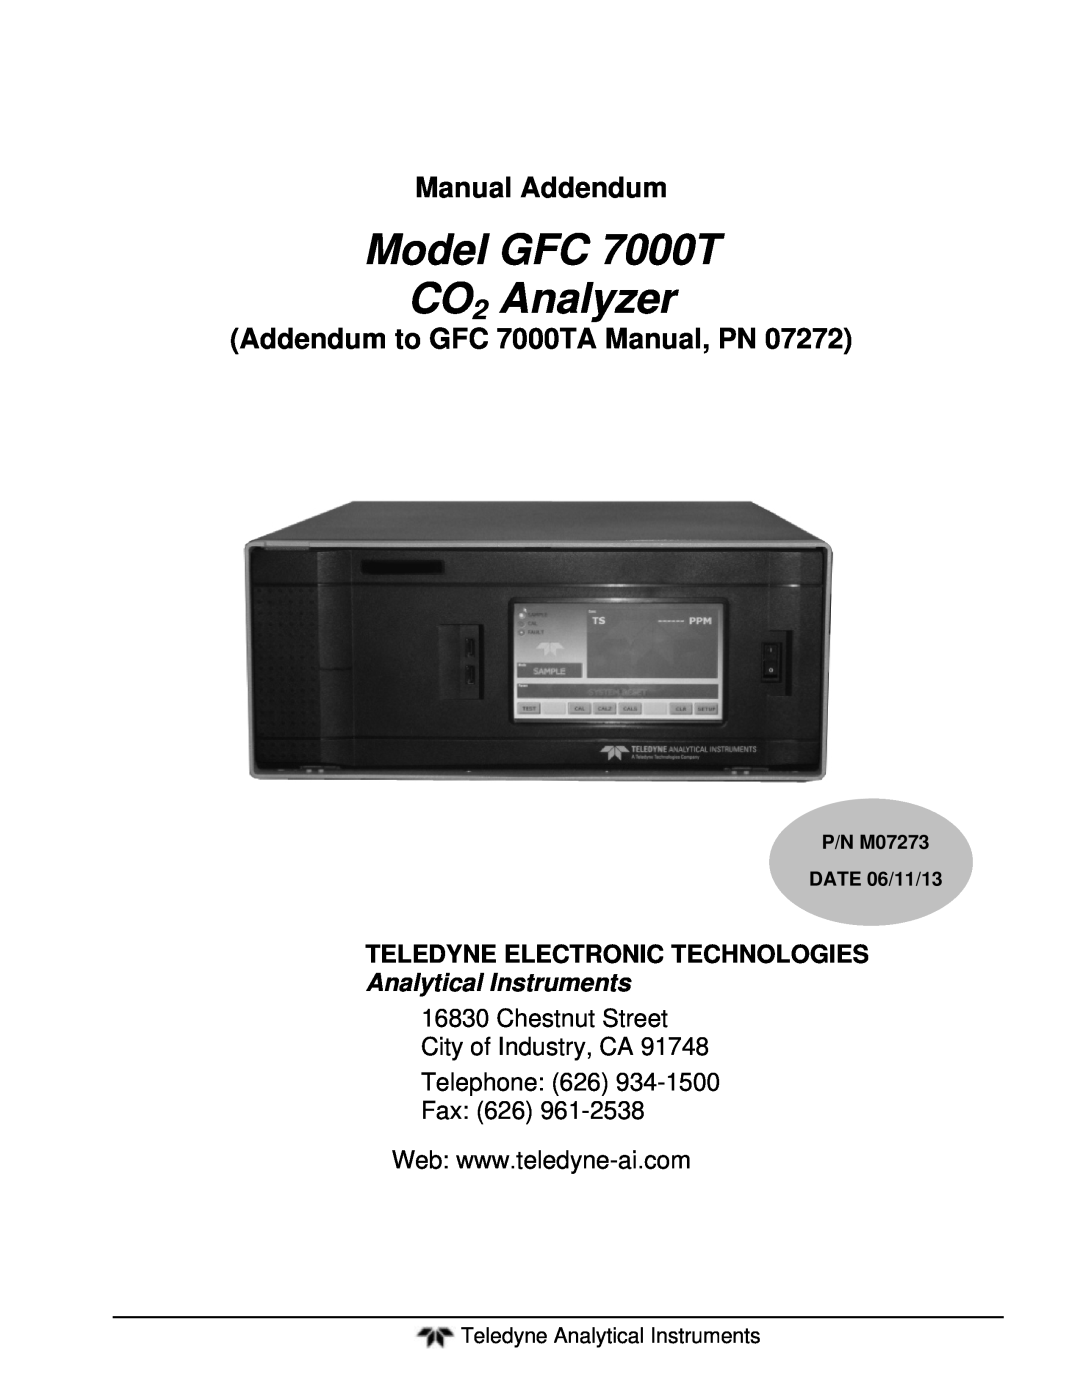 Teledyne gfc 7000t manual Teledyne Analytical Instruments, Model GFC 7000T CO2 Analyzer, Manual Addendum 